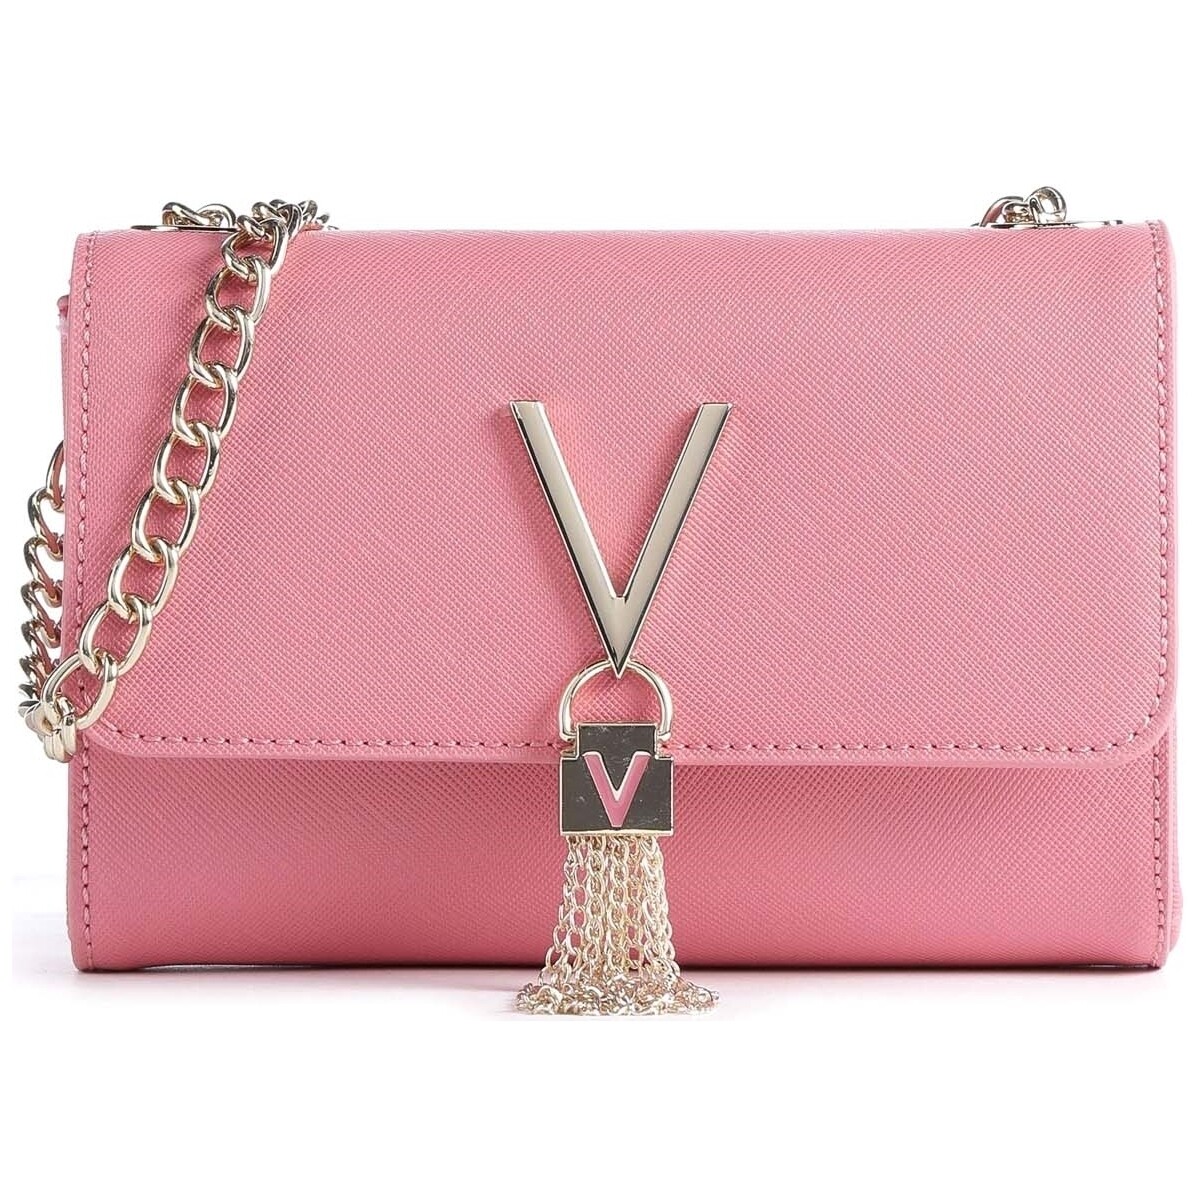 Borse Donna Tracolle Valentino Bags VBS1IJ03 Rosa